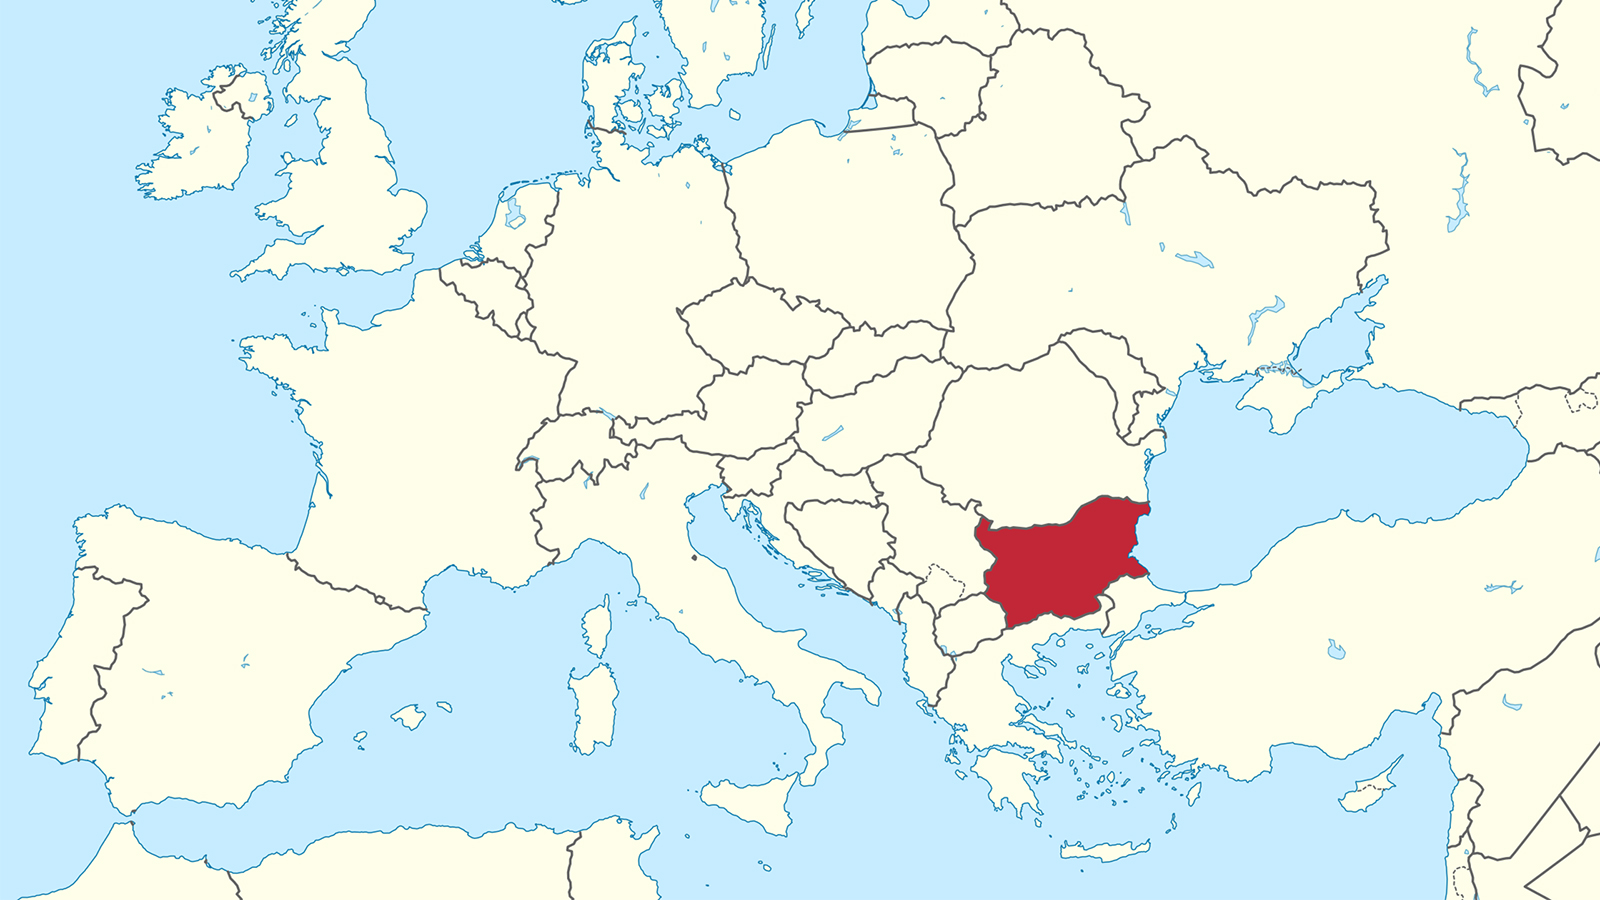 Bulgaria, red, in eastern Europe. Image courtesy Wikimedia/Creative Commons